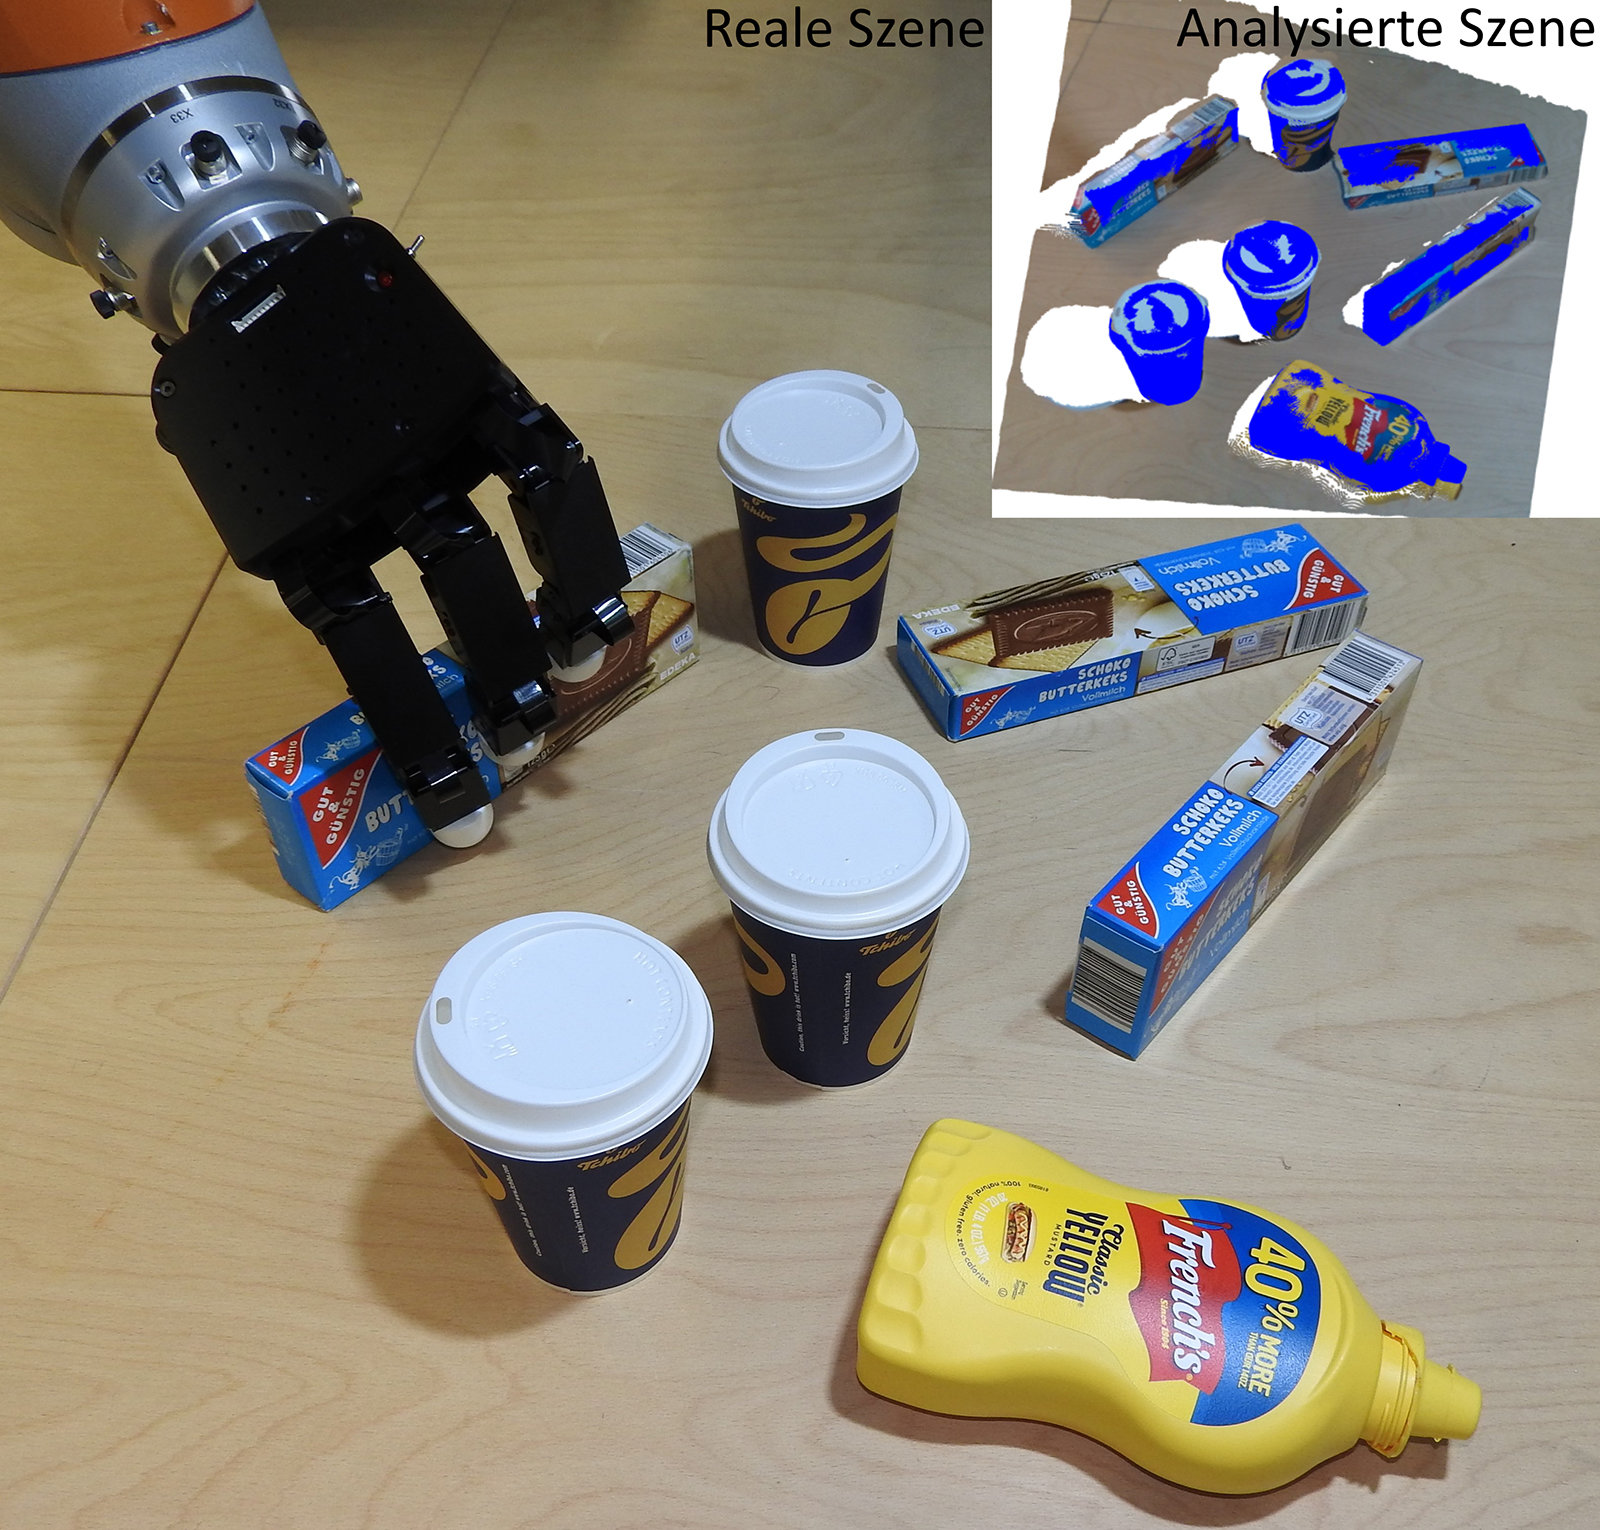 Roboterarm greift nach Kekspackung, daneben stehen Kaffeebecher